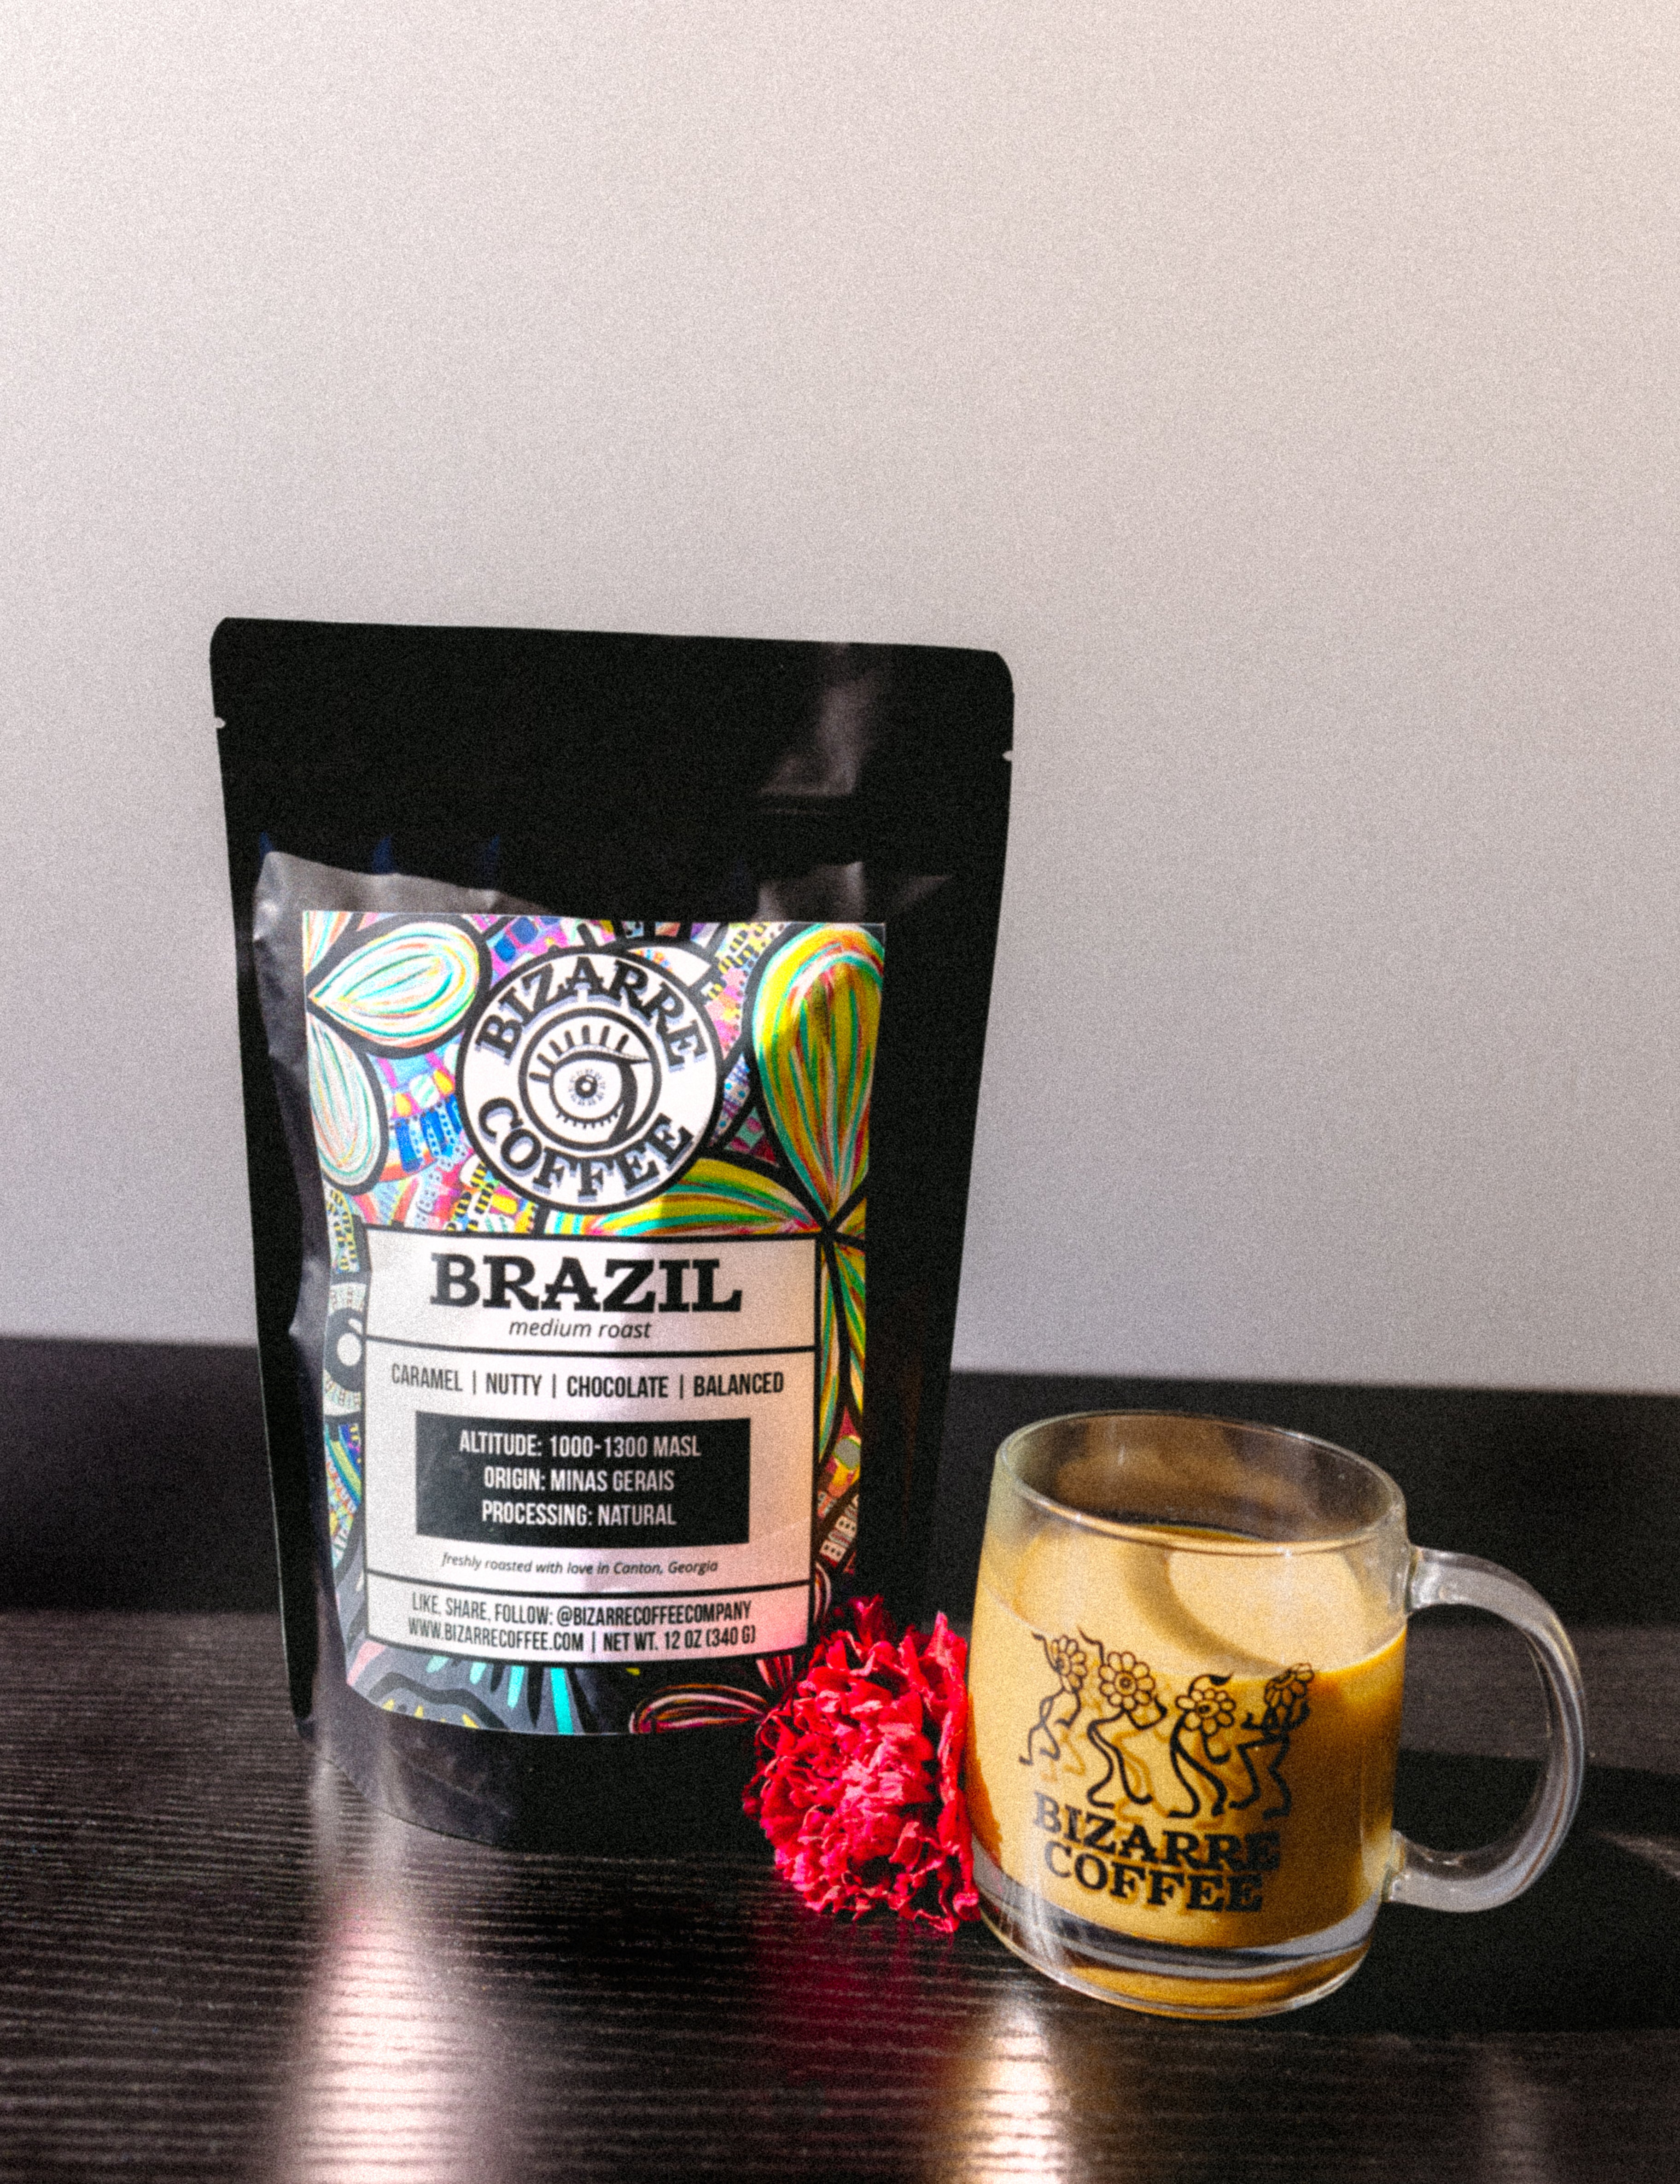 A bag of Brazil medium roast coffee next to a coffee mug.